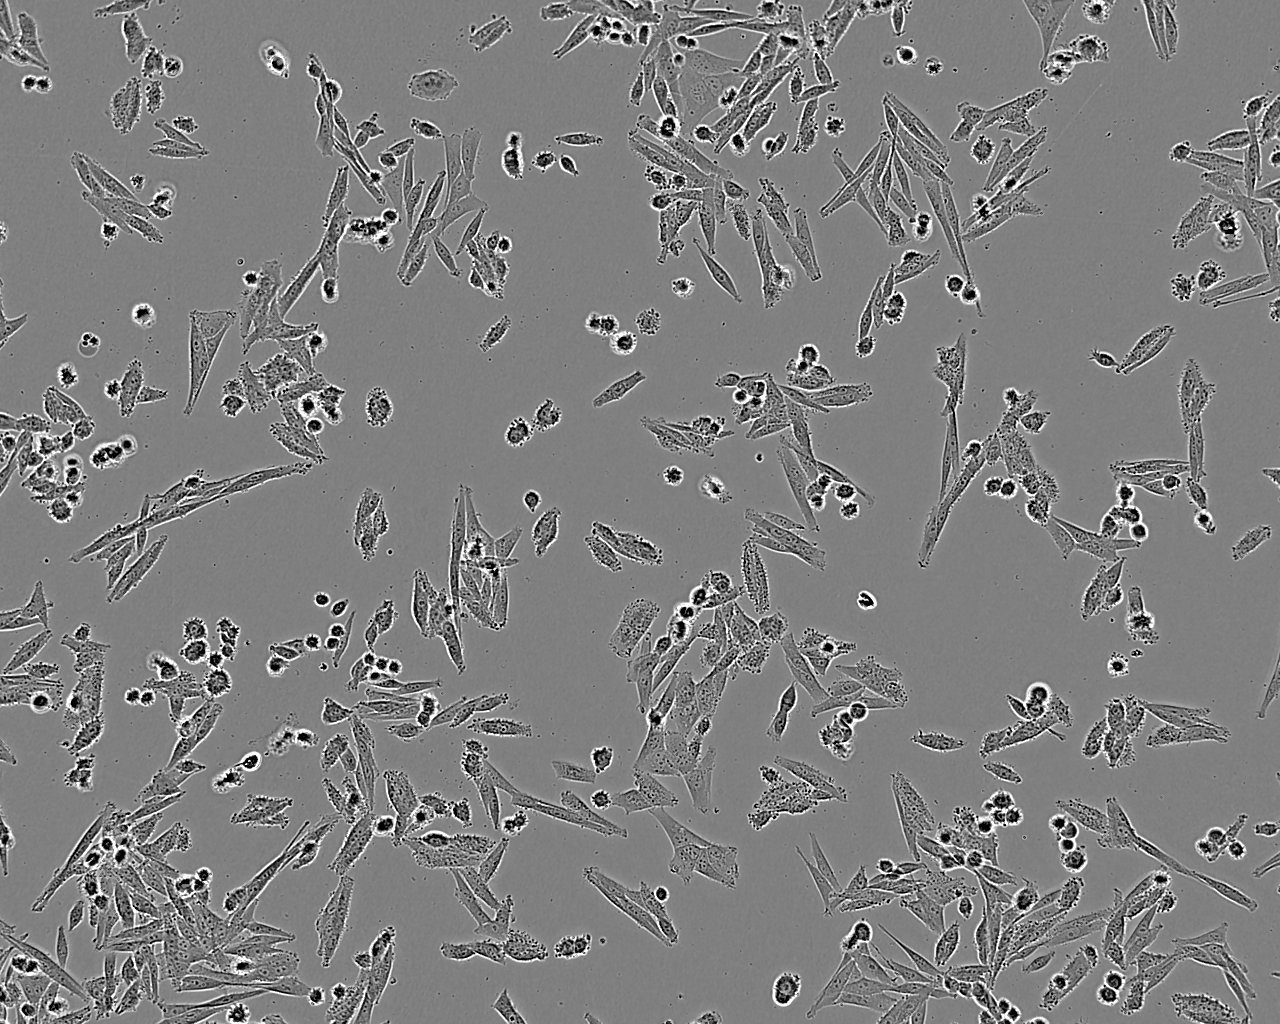 NCI-H2030 Cell:人非小细胞肺癌细胞系,NCI-H2030 Cell